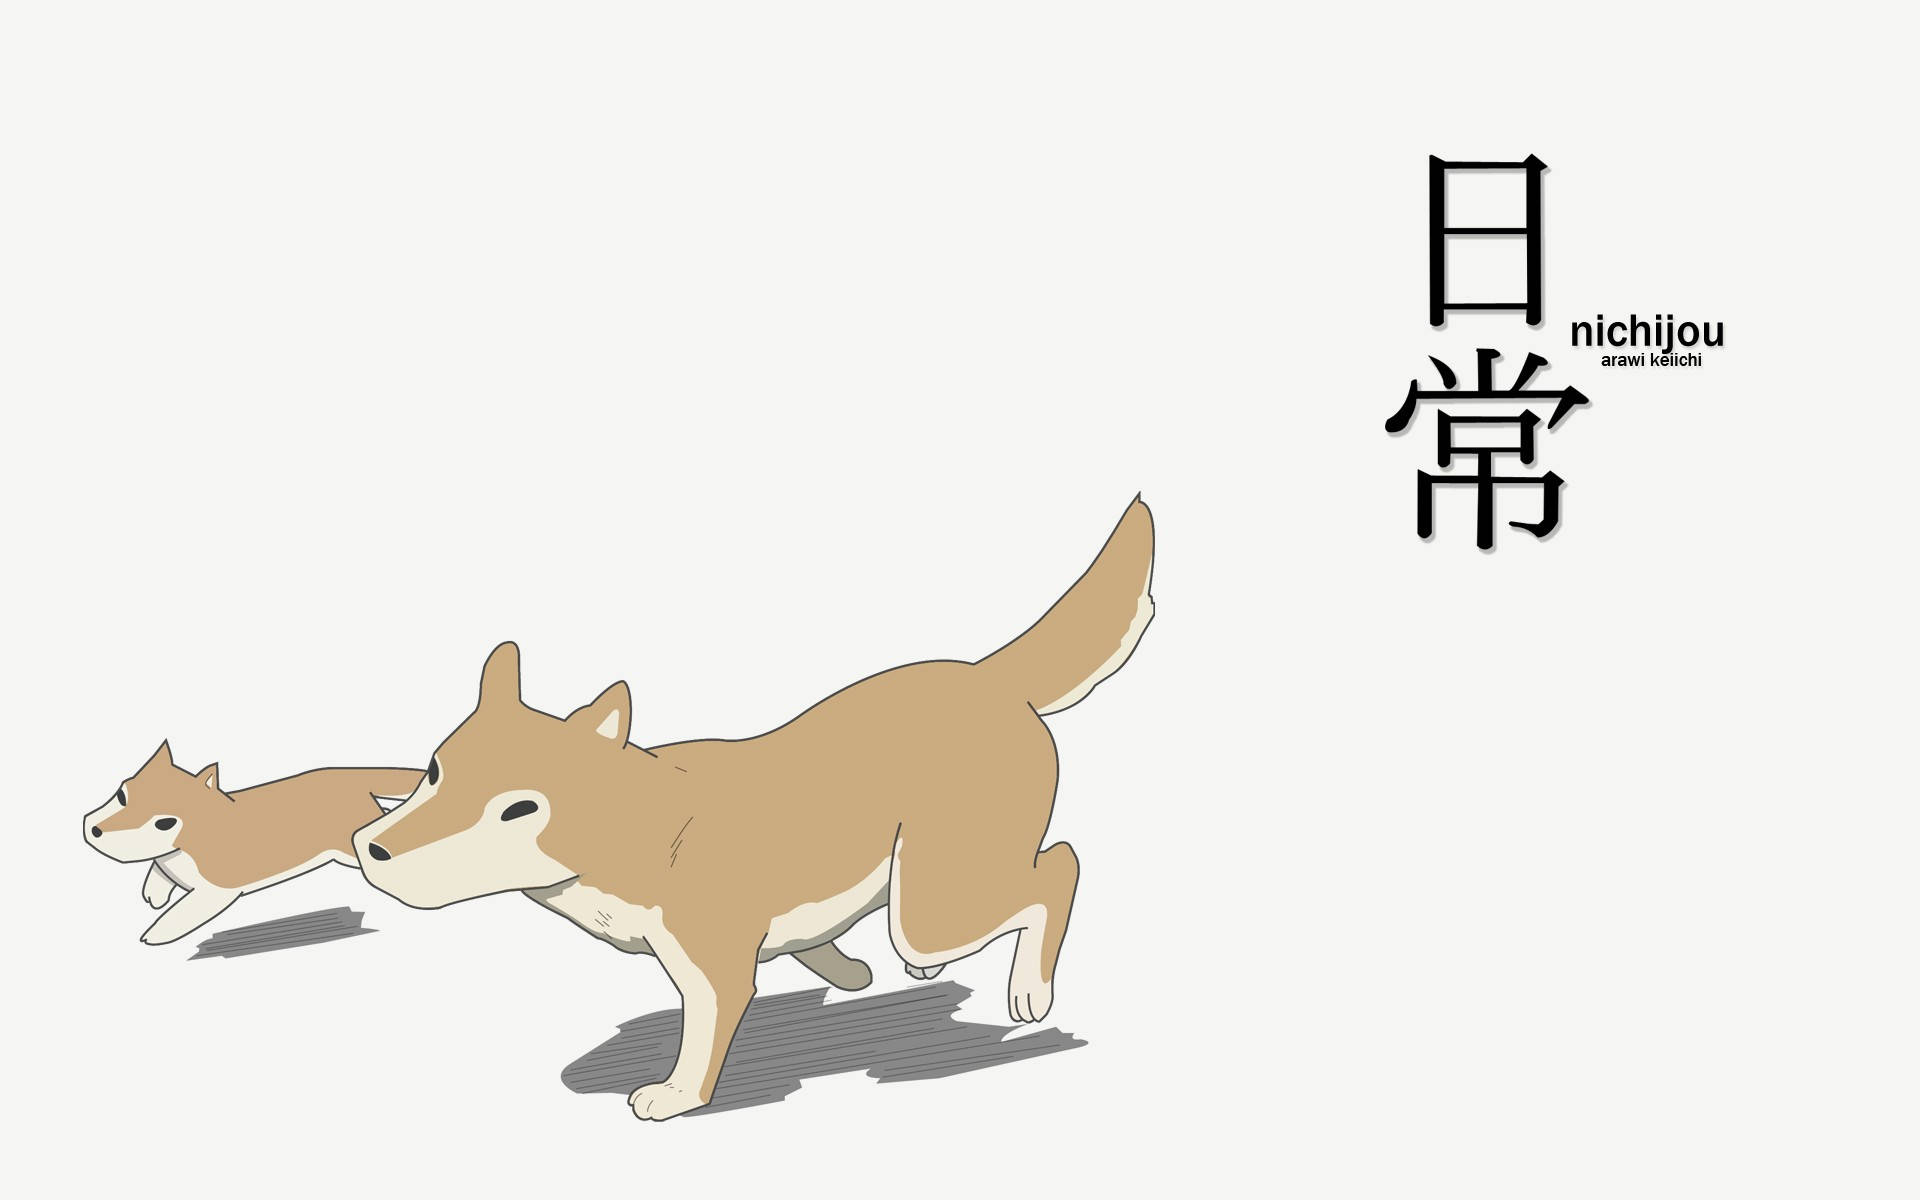 Nichijou Buddy Dog With White Backdrop